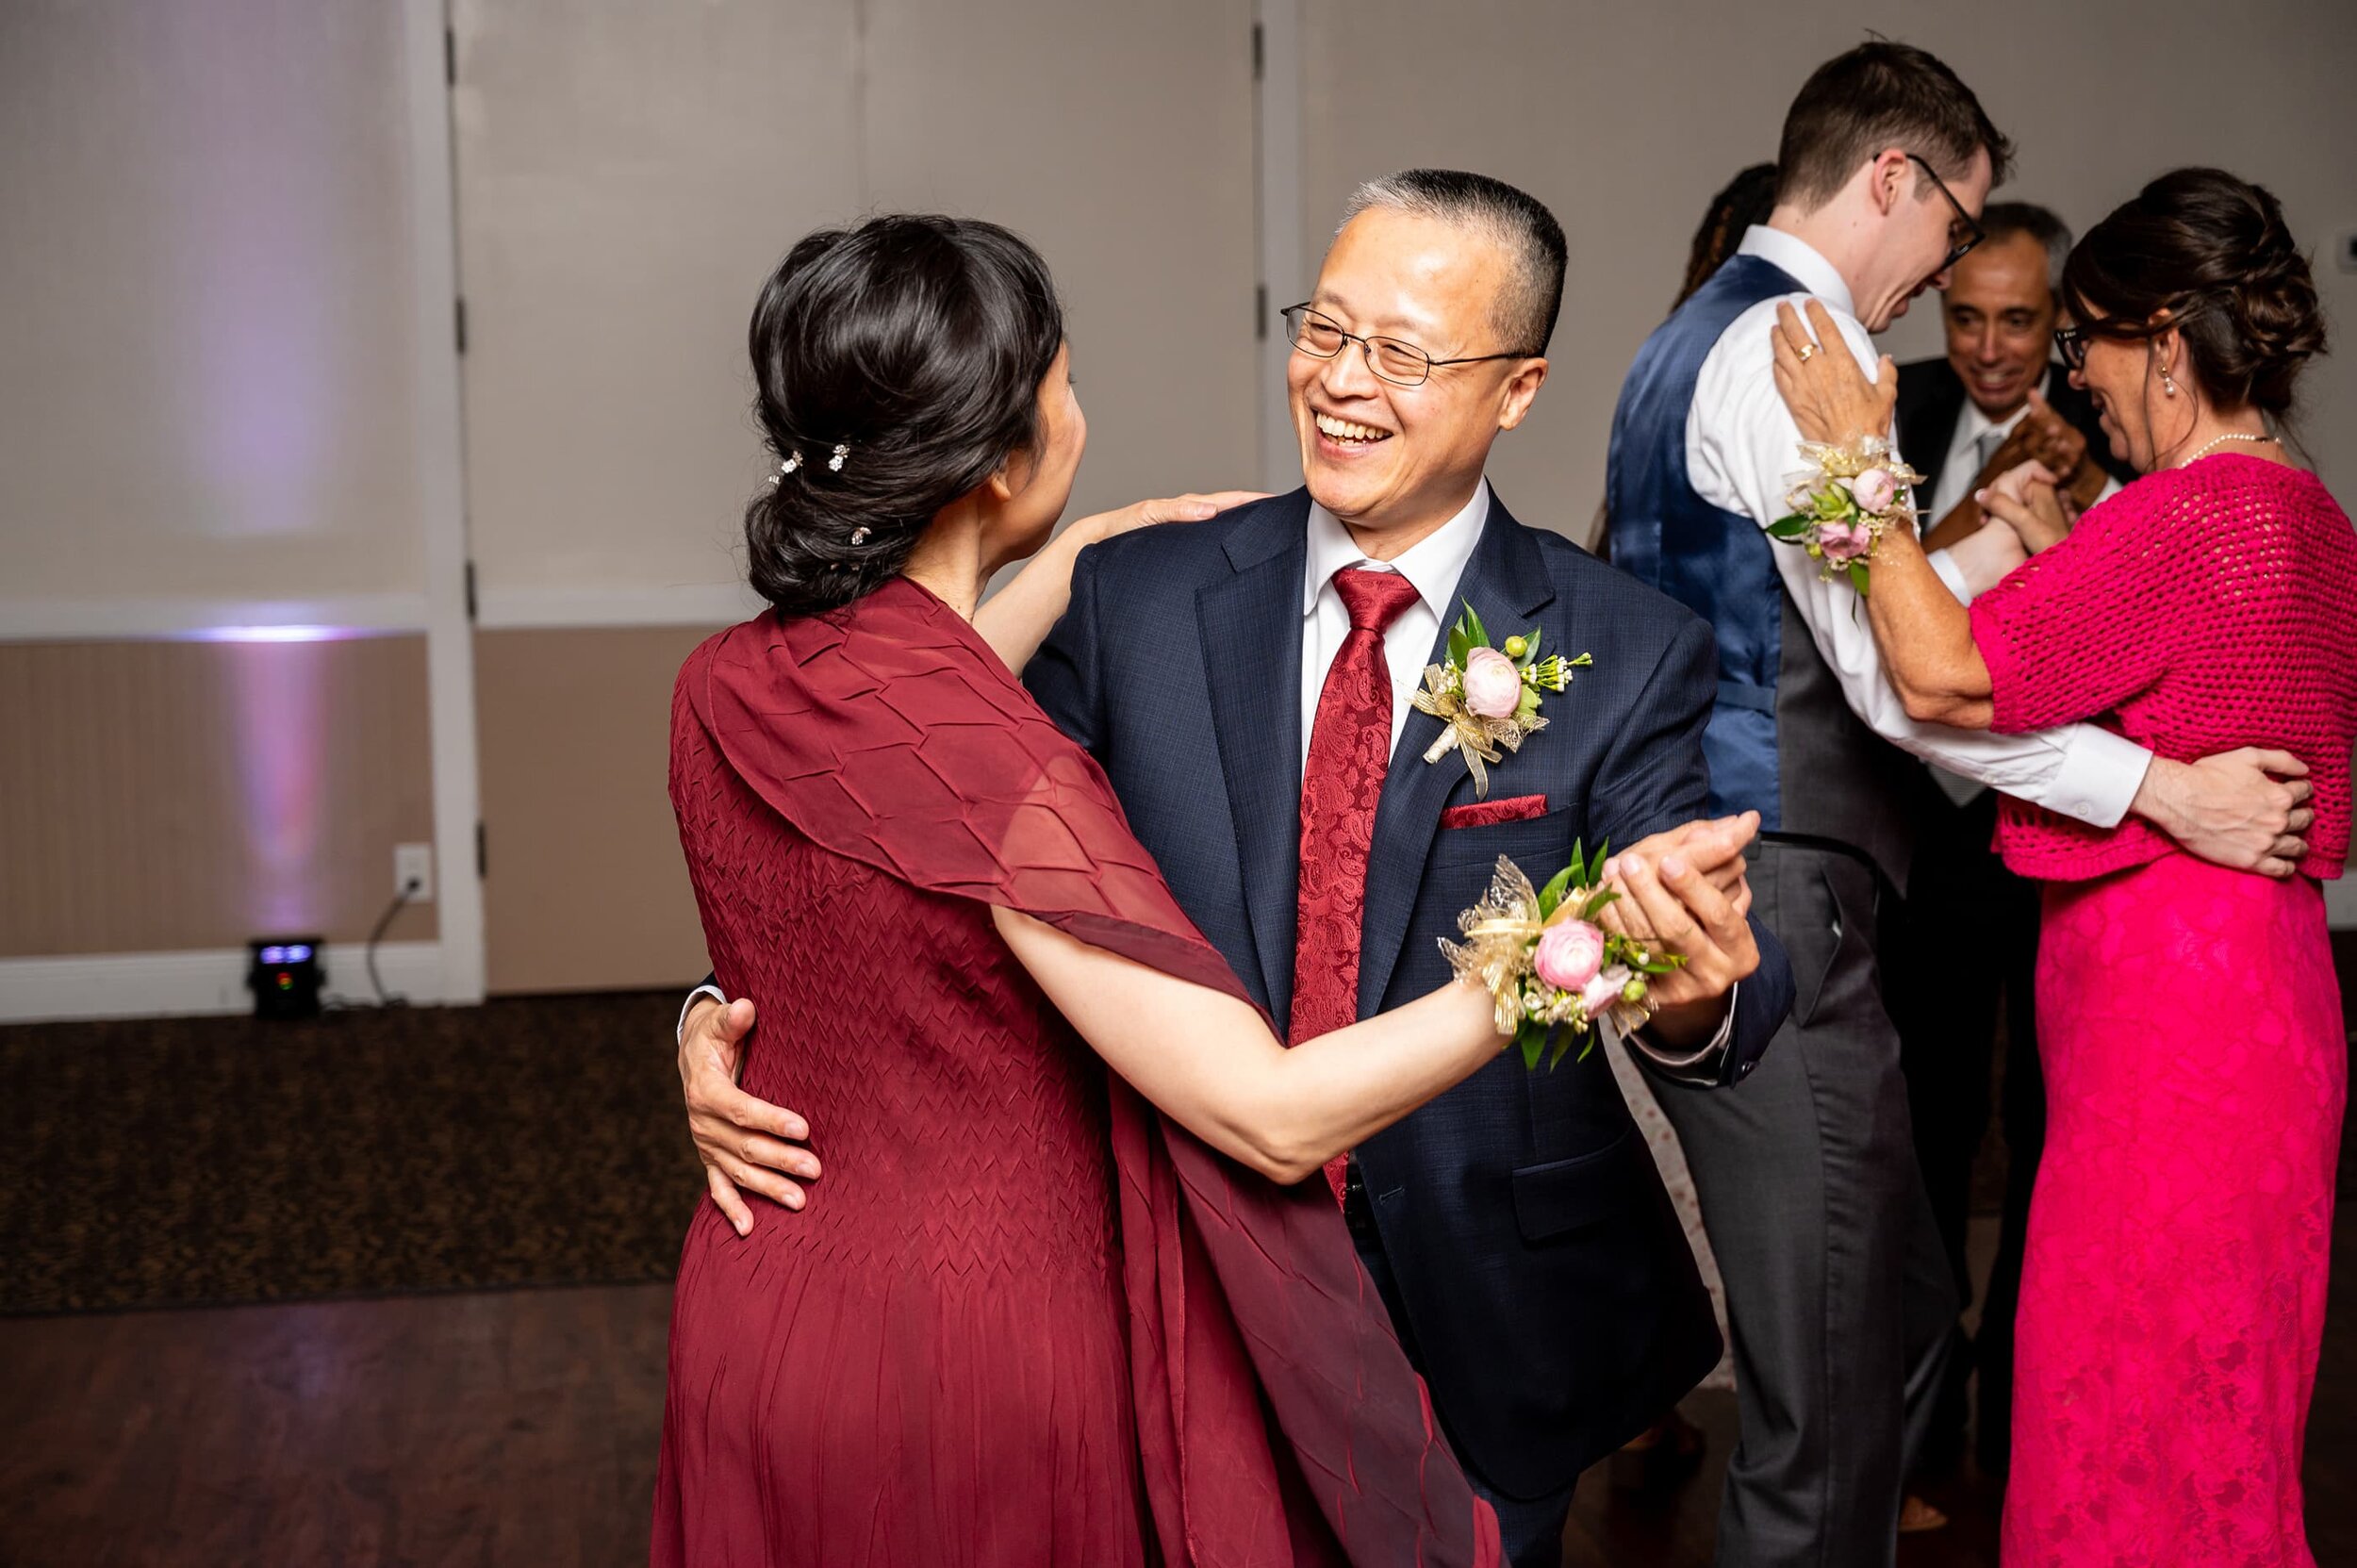 Bride's parents dancing during wedding reception